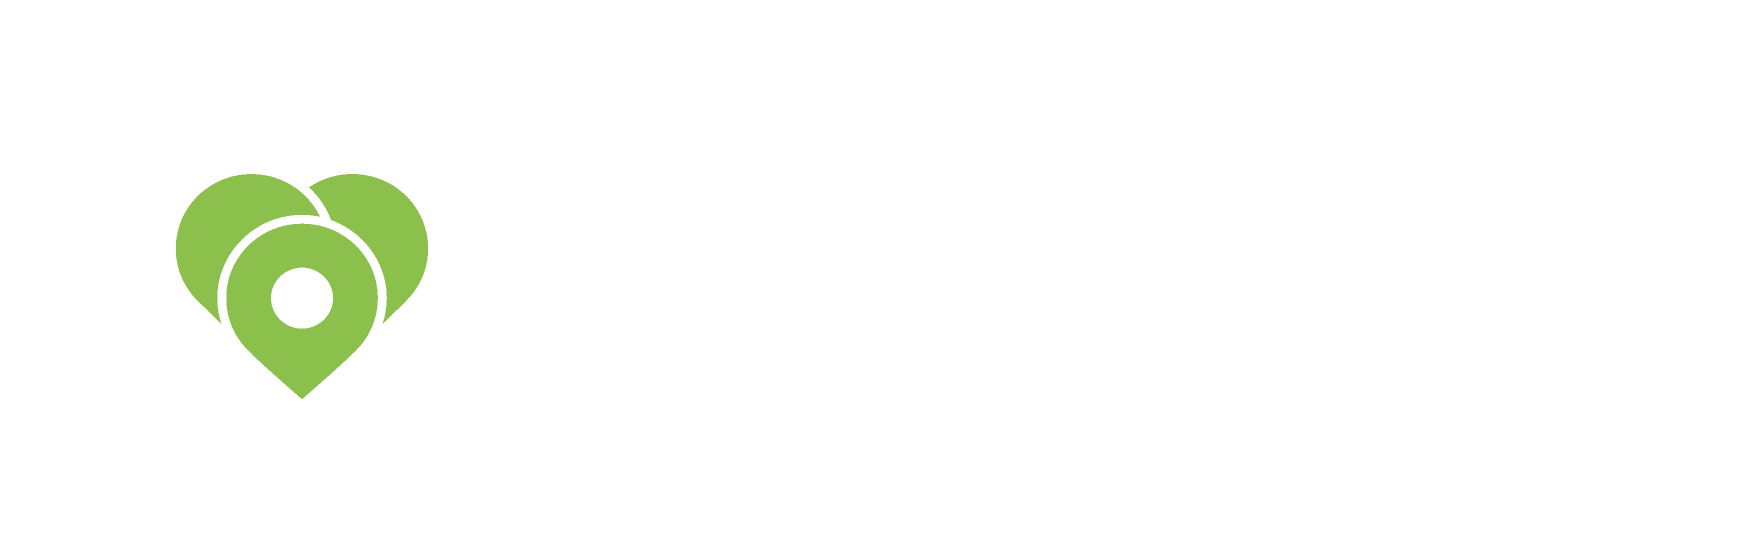 TargetAid_logo2021_horisontal_neg--1